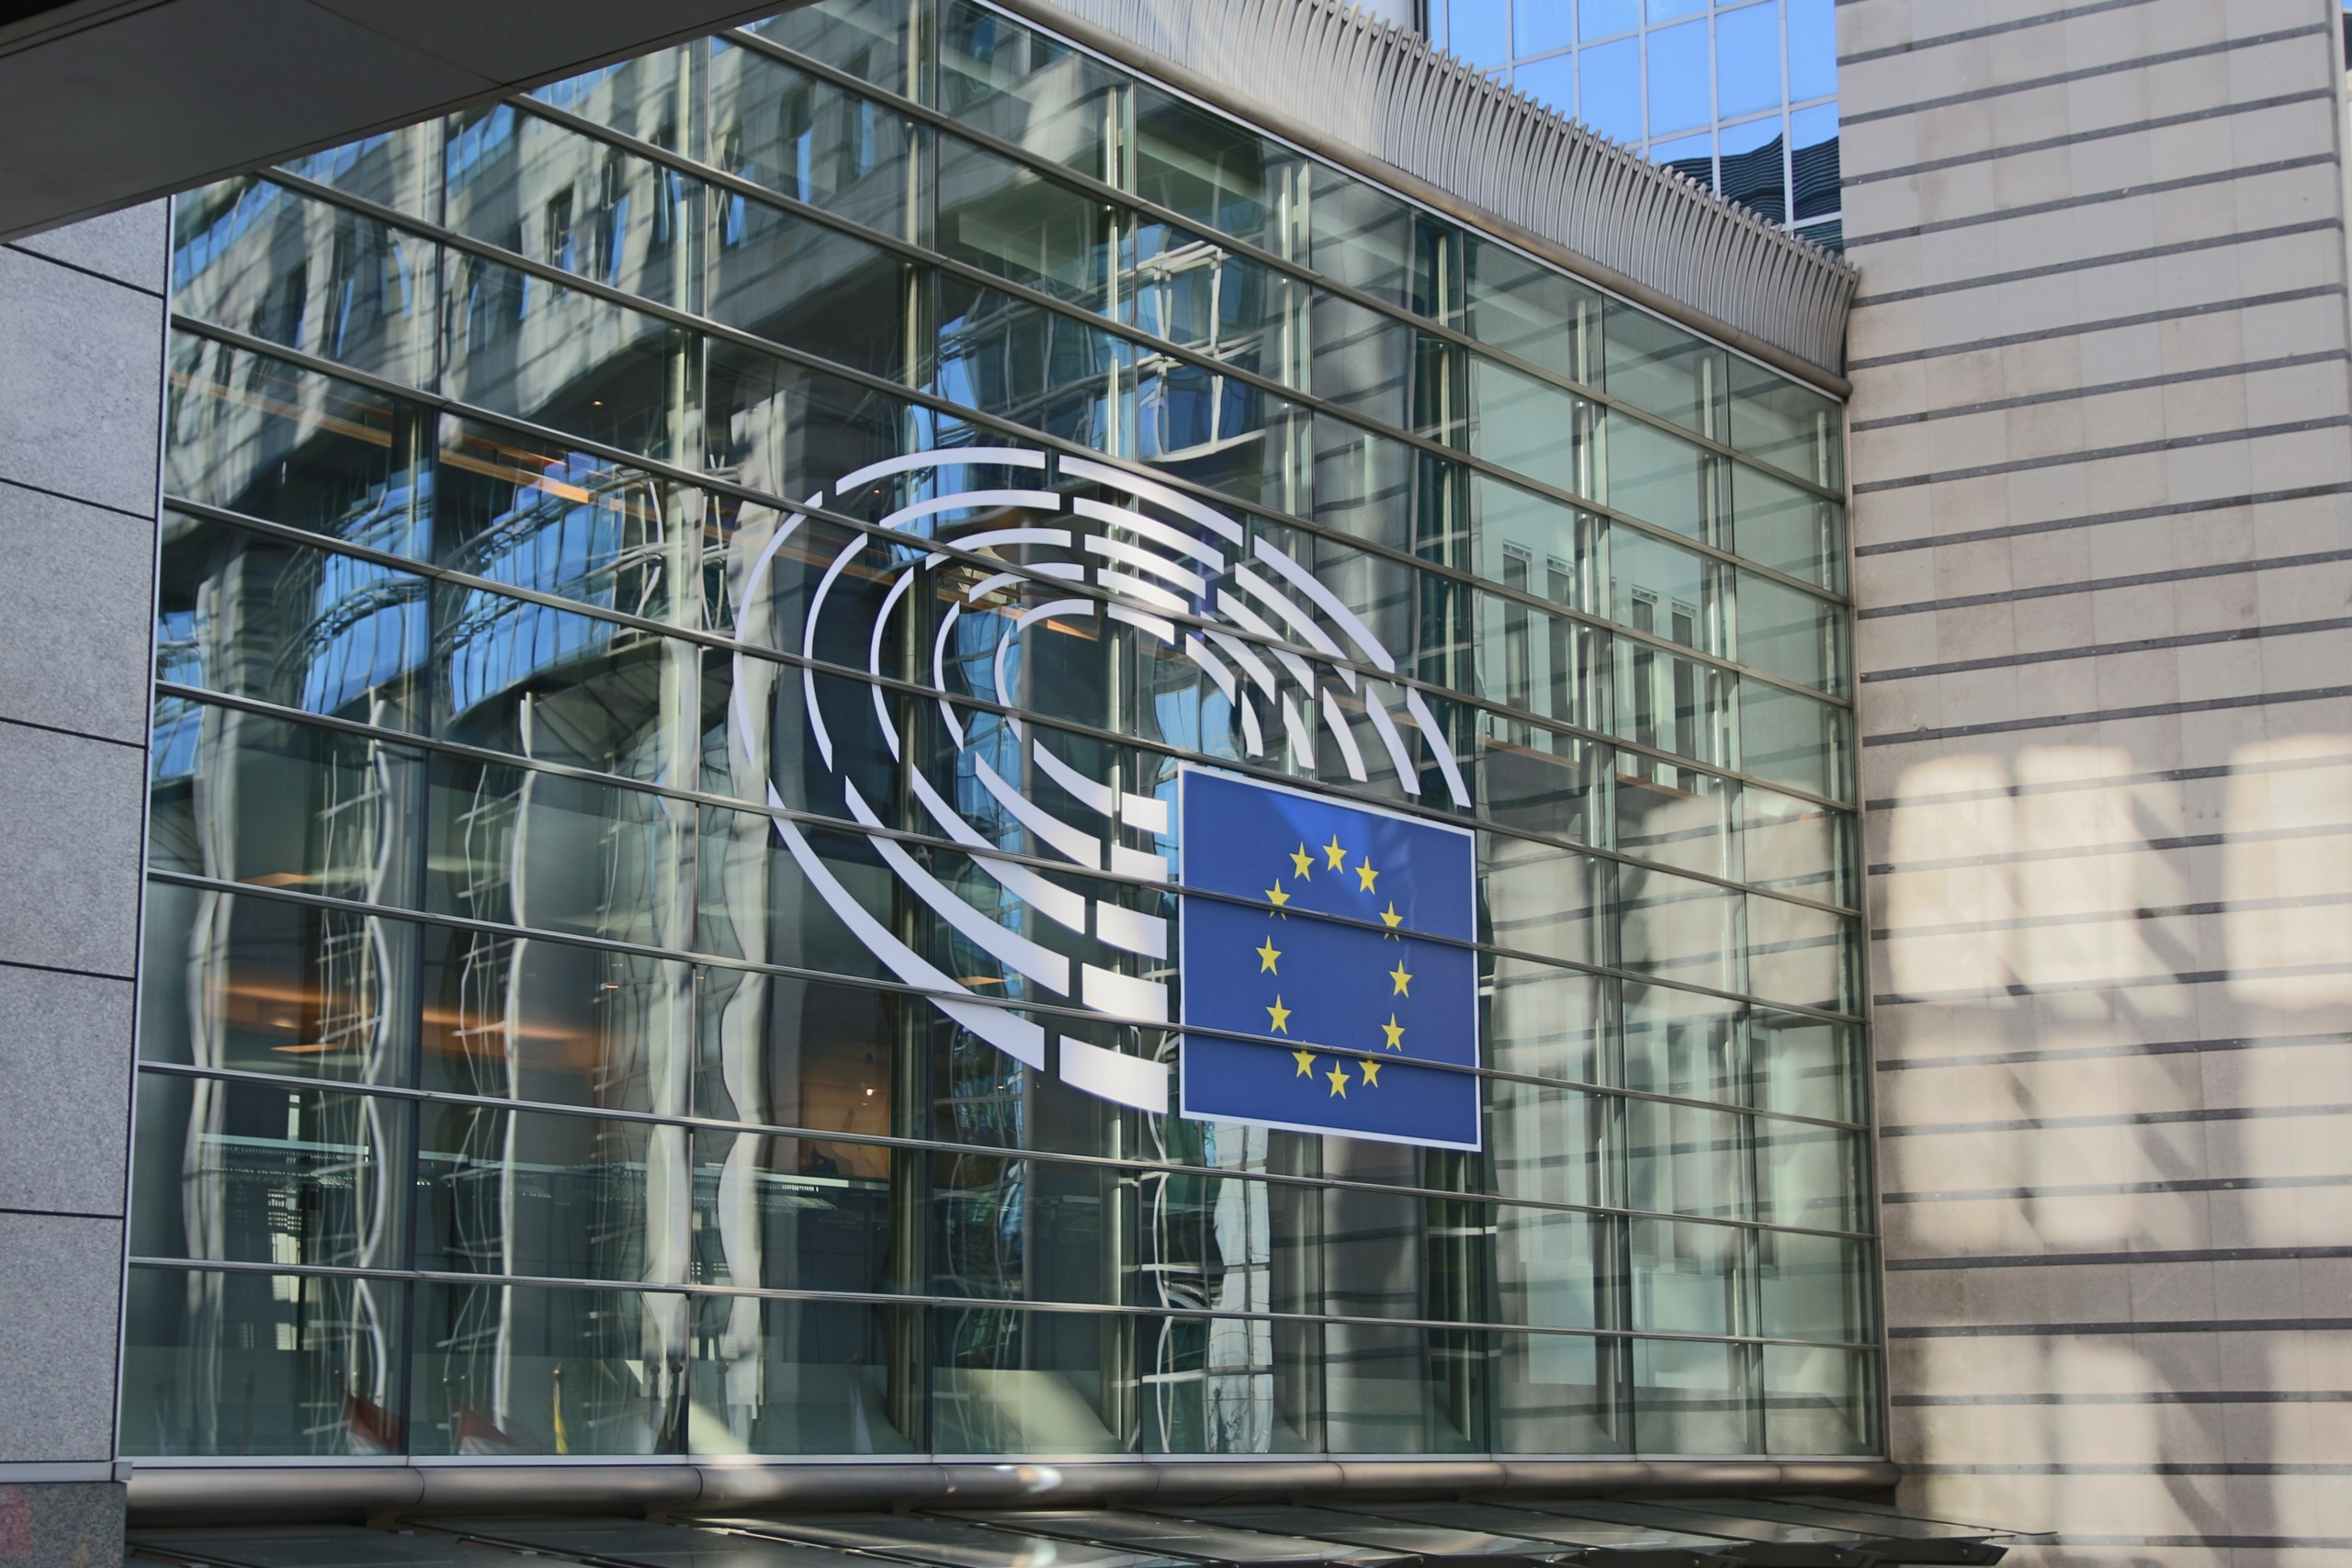 Fassade des EU-Parlaments mit Europaflagge